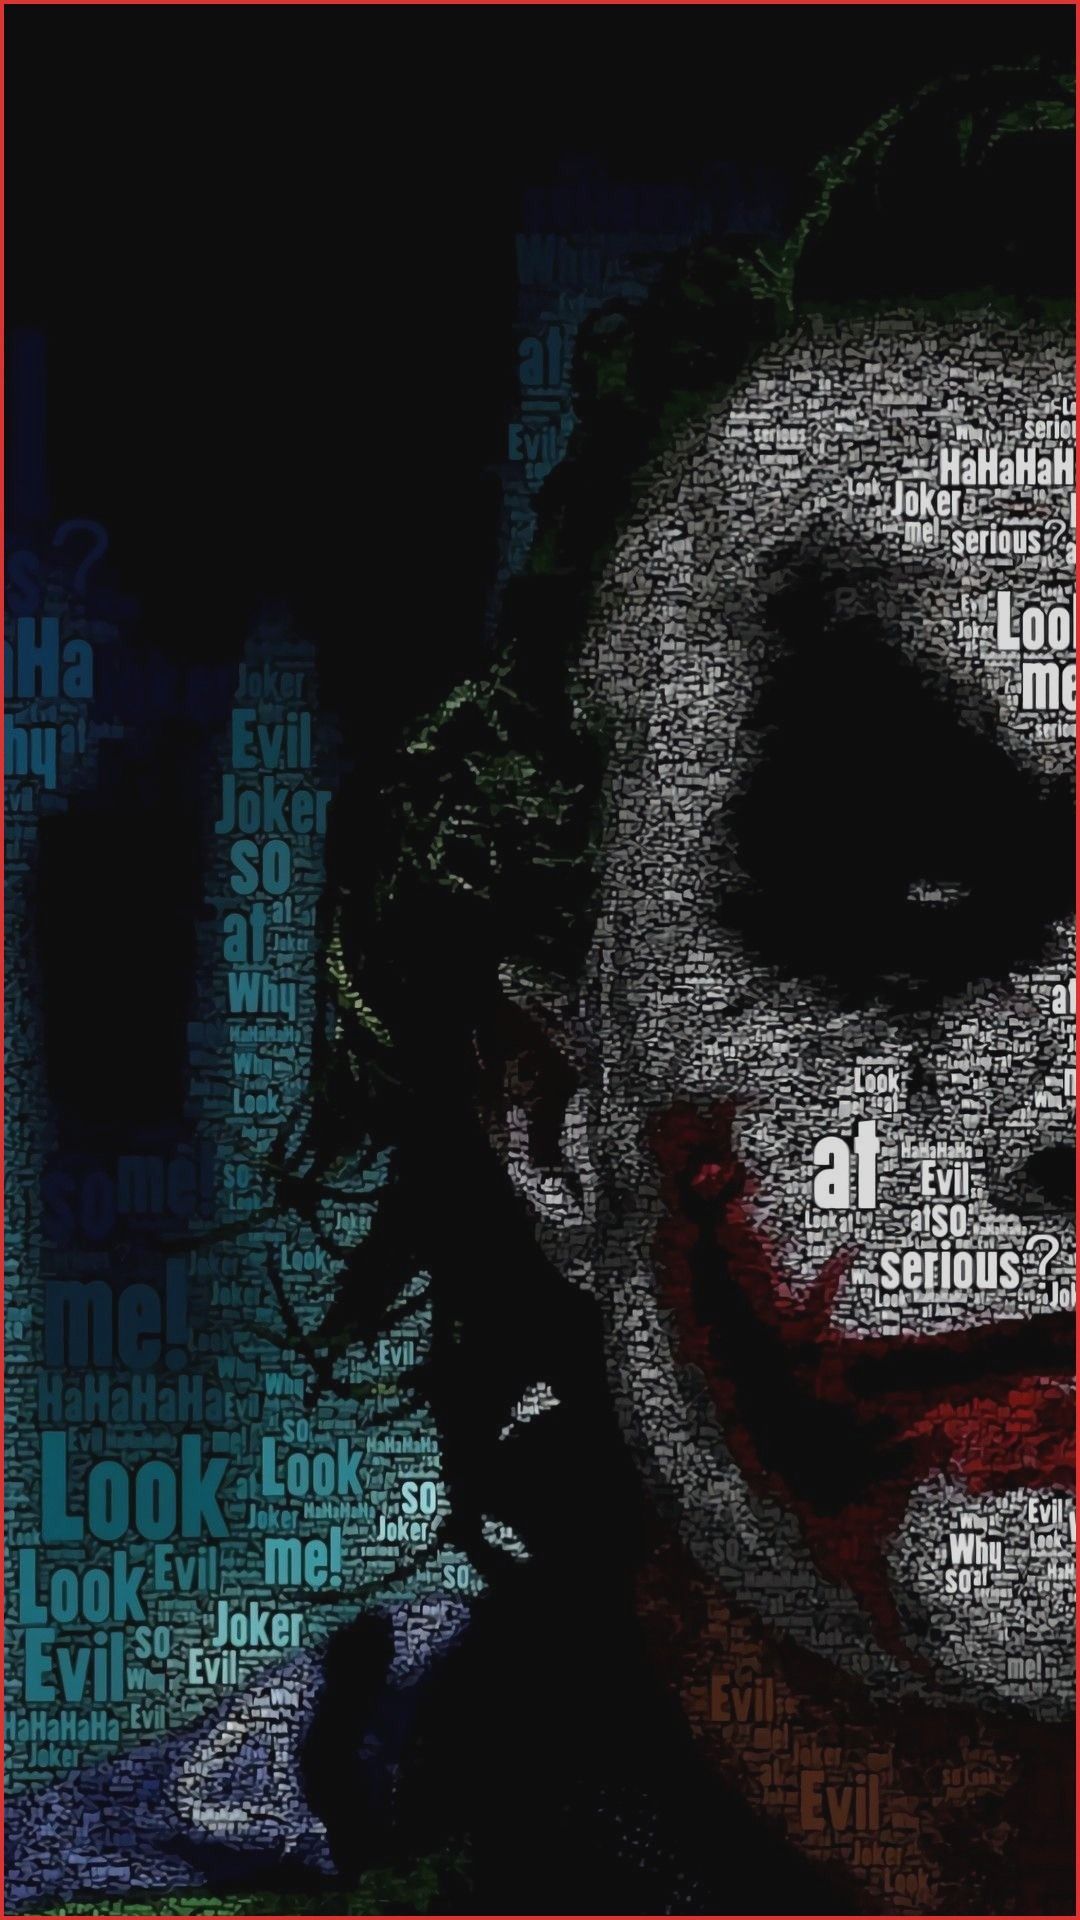  Joker Aesthetic Wallpapers Full HD Wallpaper Free Download